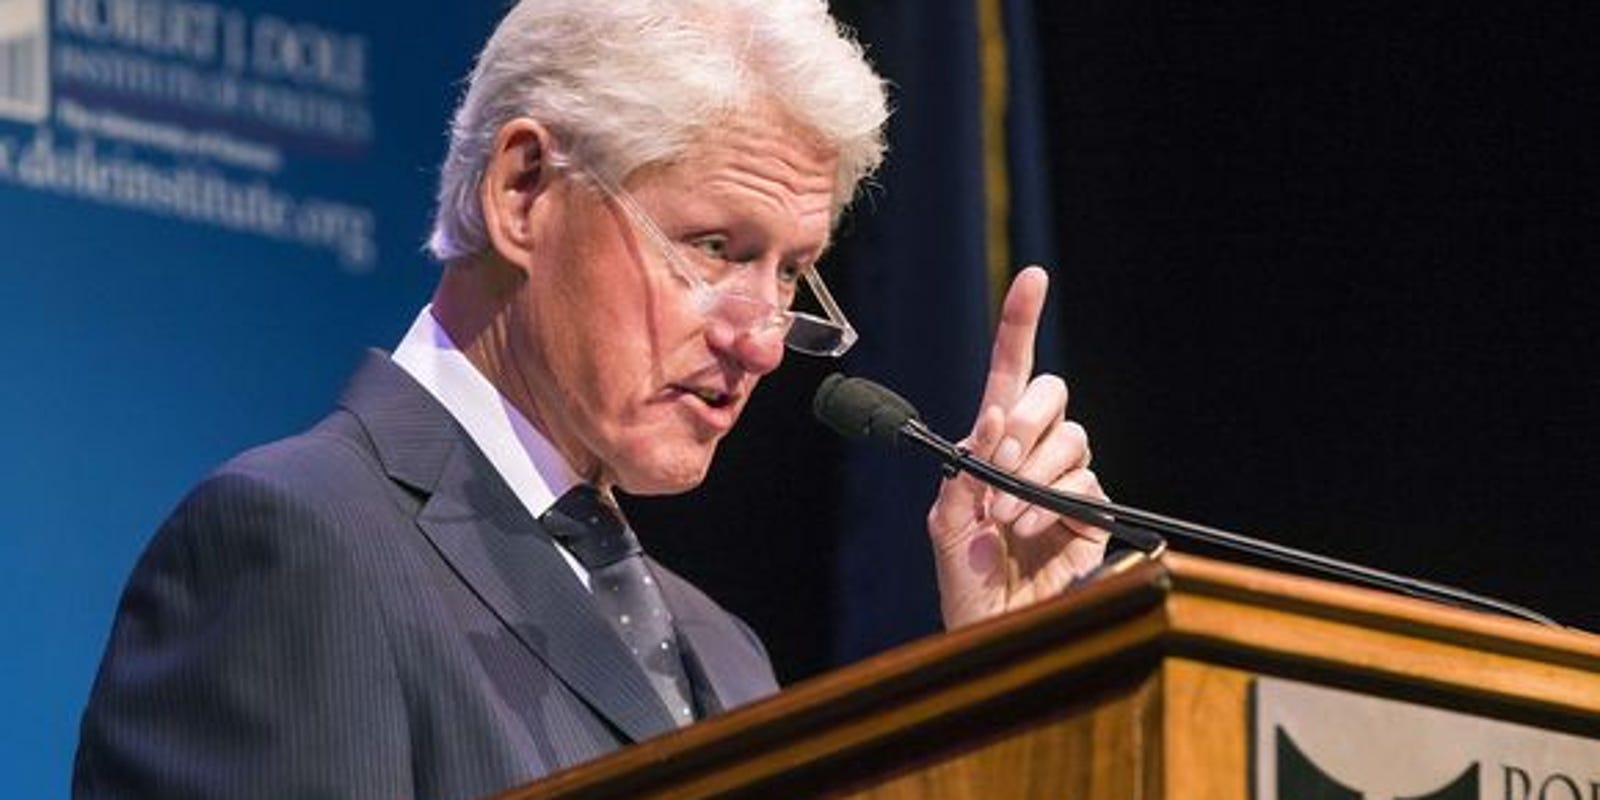 Gop Women Urge Trump To Drop Talk Of Bill Clinton Sex Scandals